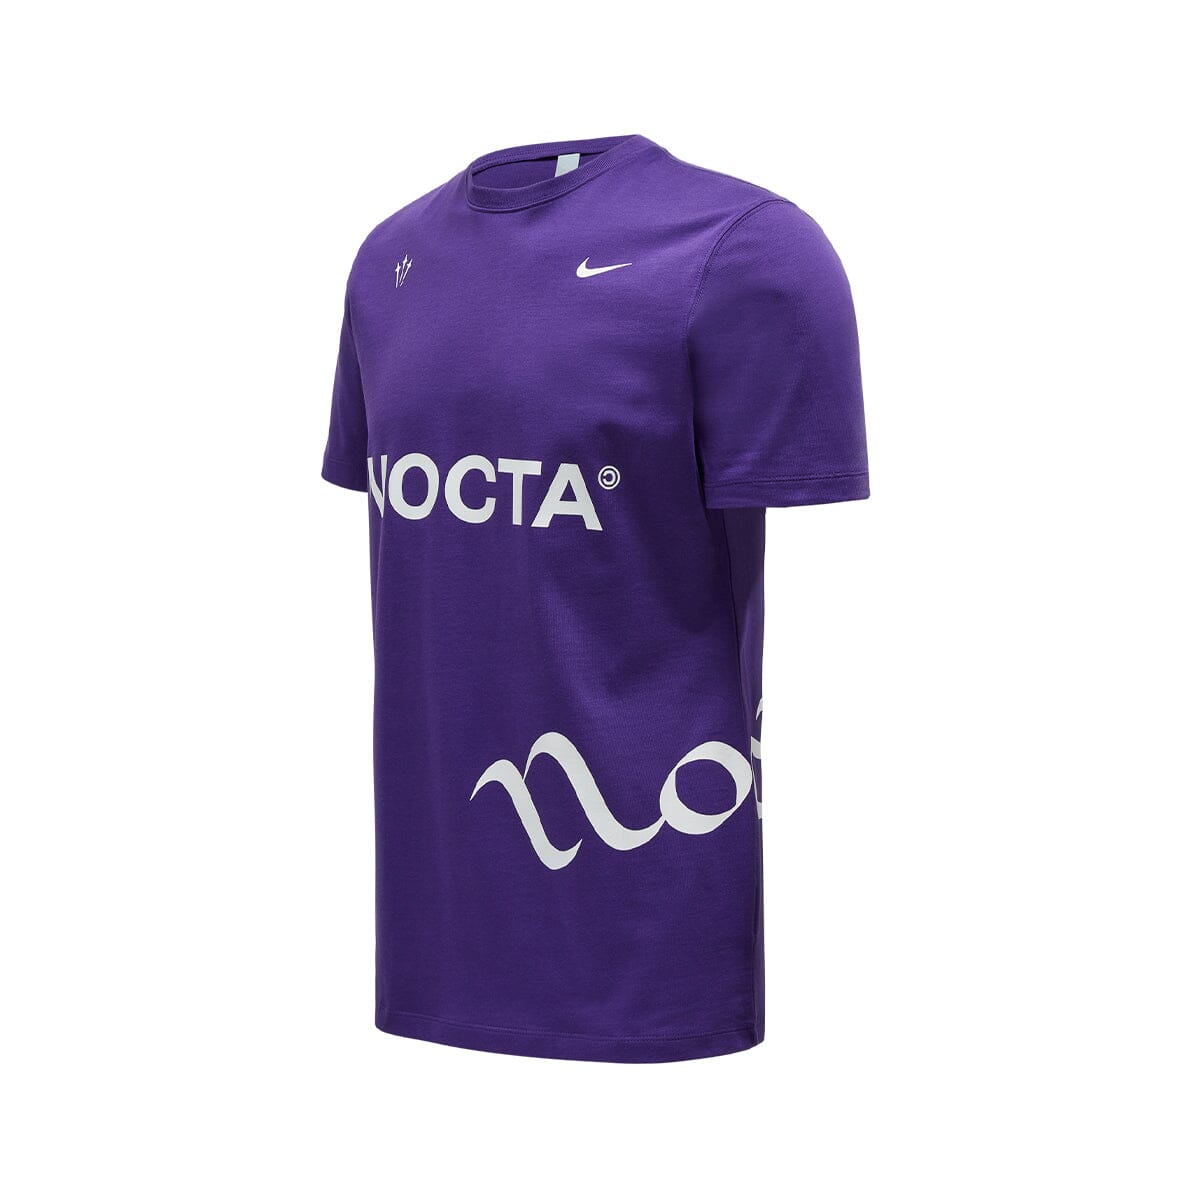 Camiseta Nike x NOCTA Basketball Purple Nocta Blizz Sneakers 